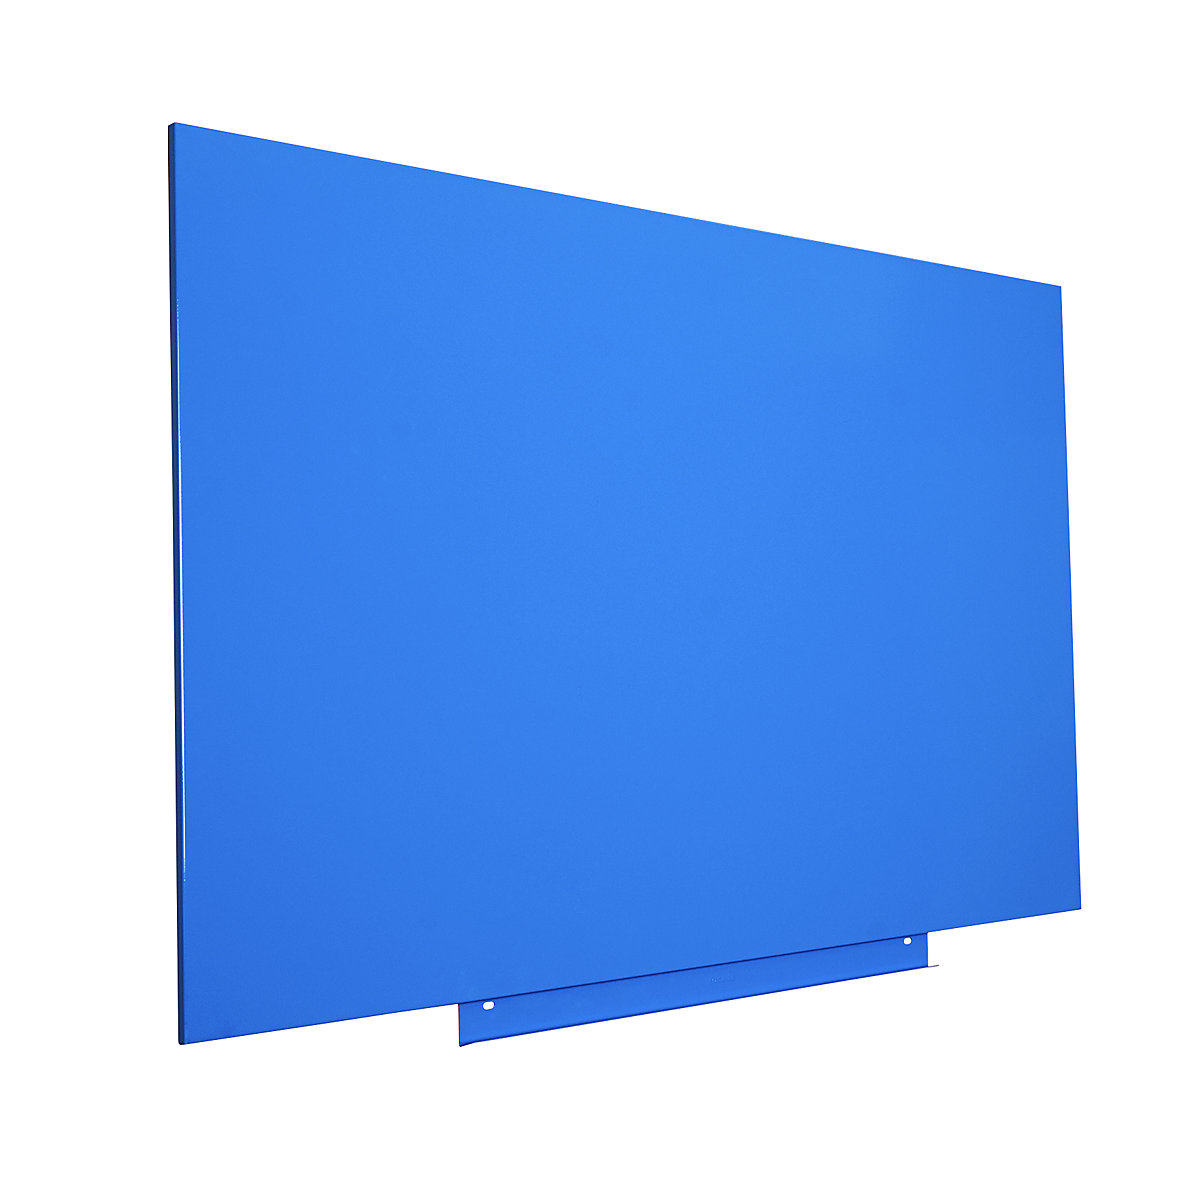 Whiteboard-Modul, BASIC-Version – Stahlblech, lackiert, BxH 750 x 1150 mm, pastellblau-17